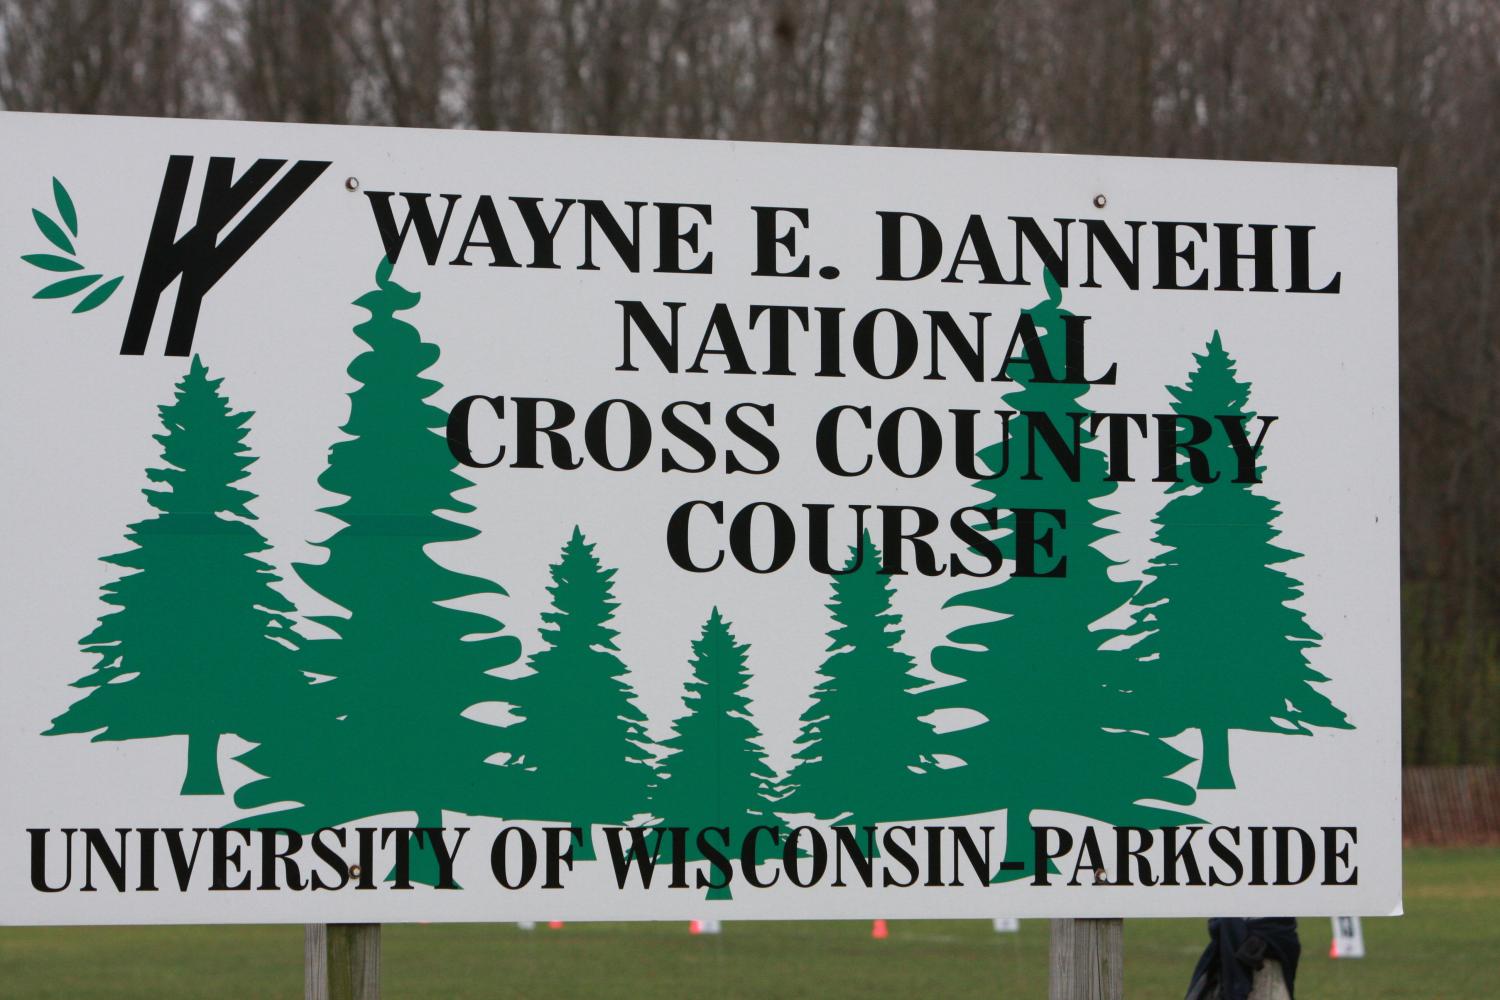 The Wayne E. Dannehl course in Kenosha, Wisconsin is Marquettes de facto home track.